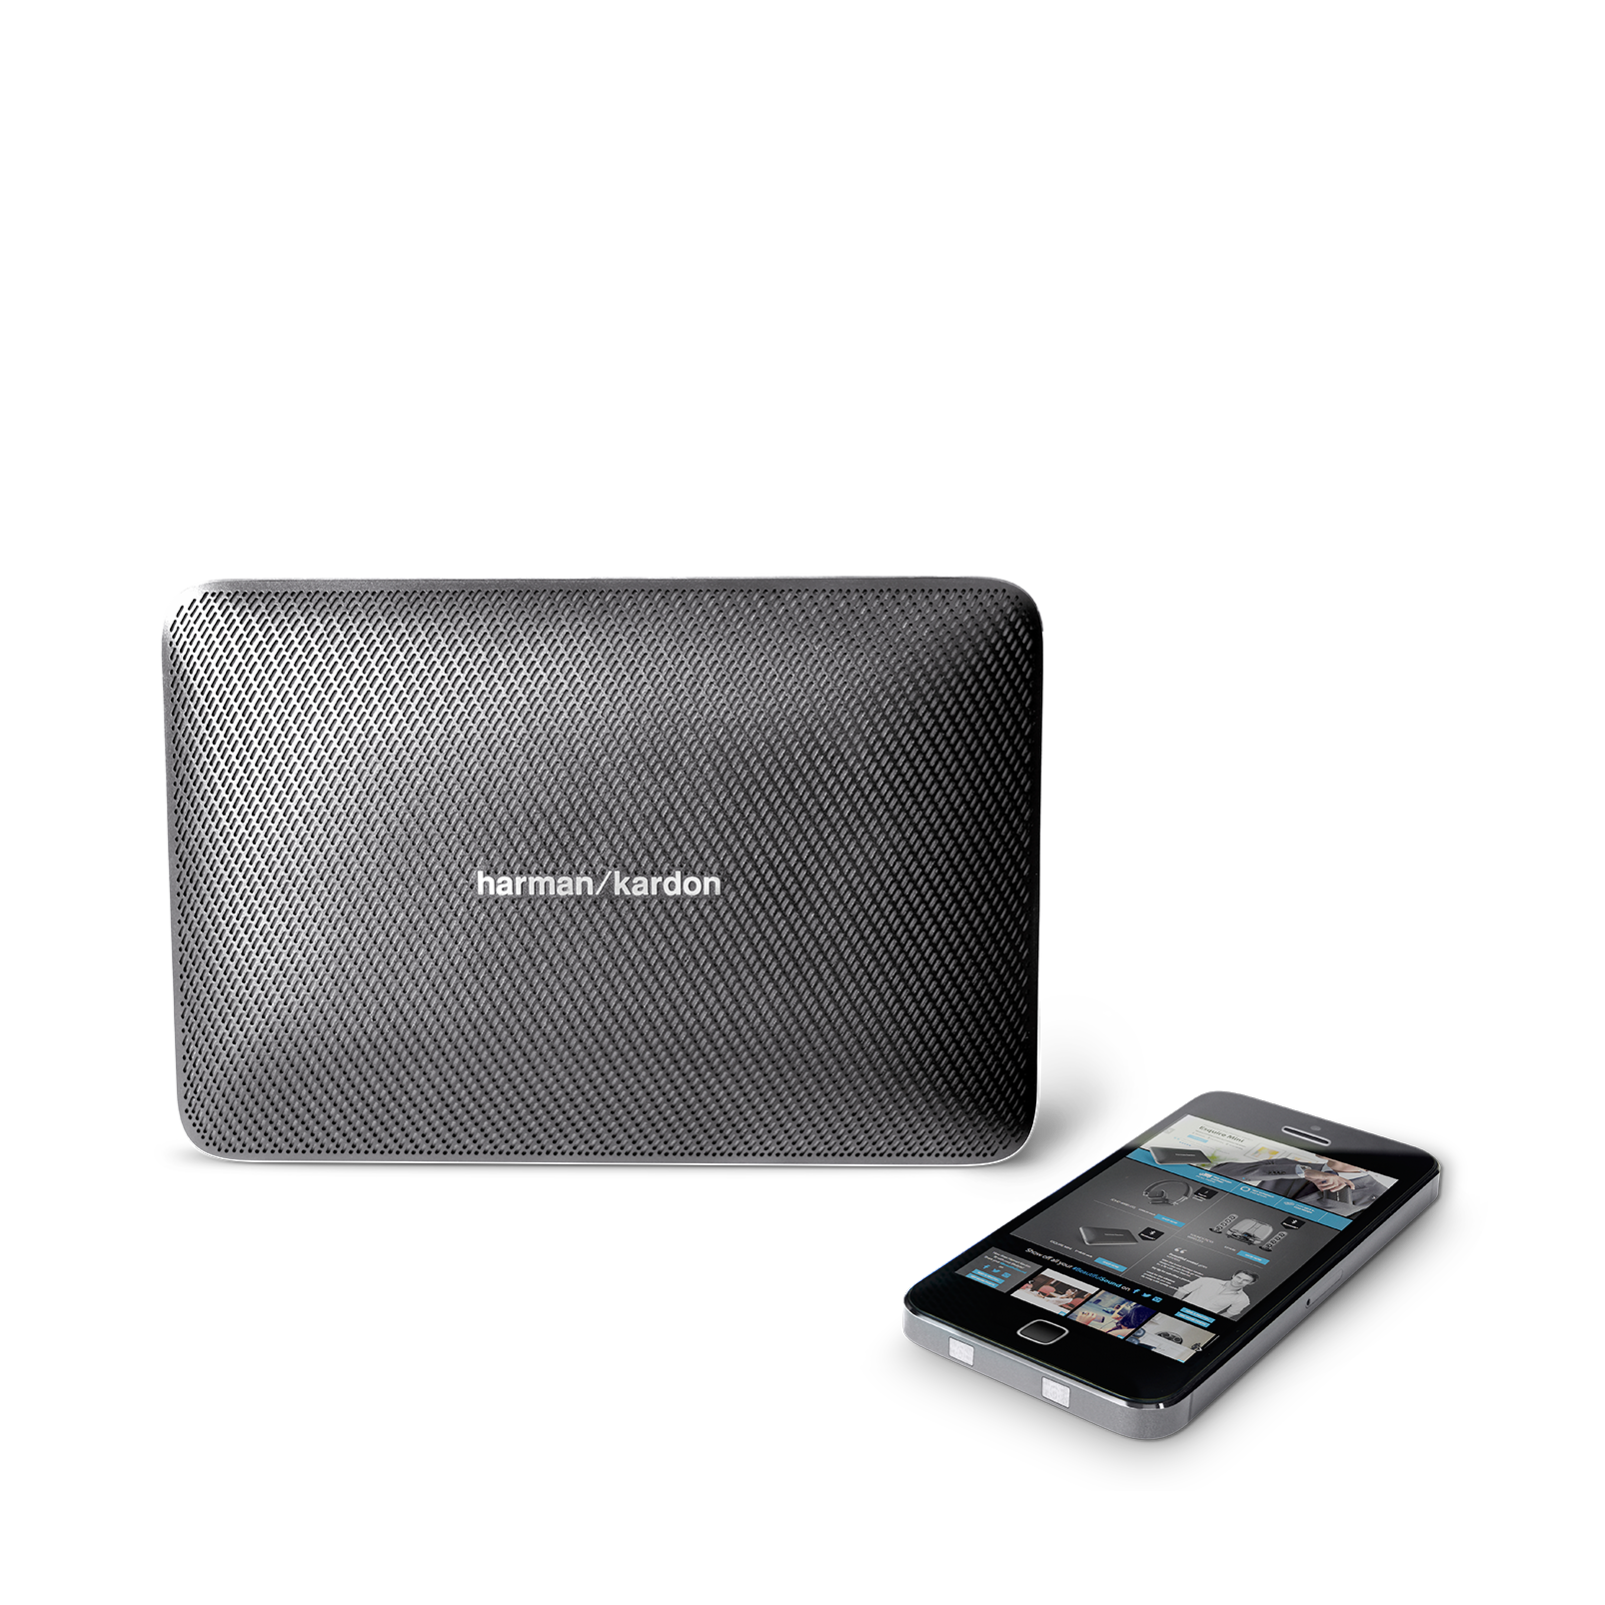 Esquire 2 - Grey - Premium portable Bluetooth speaker with quad microphone conferencing system - Detailshot 5